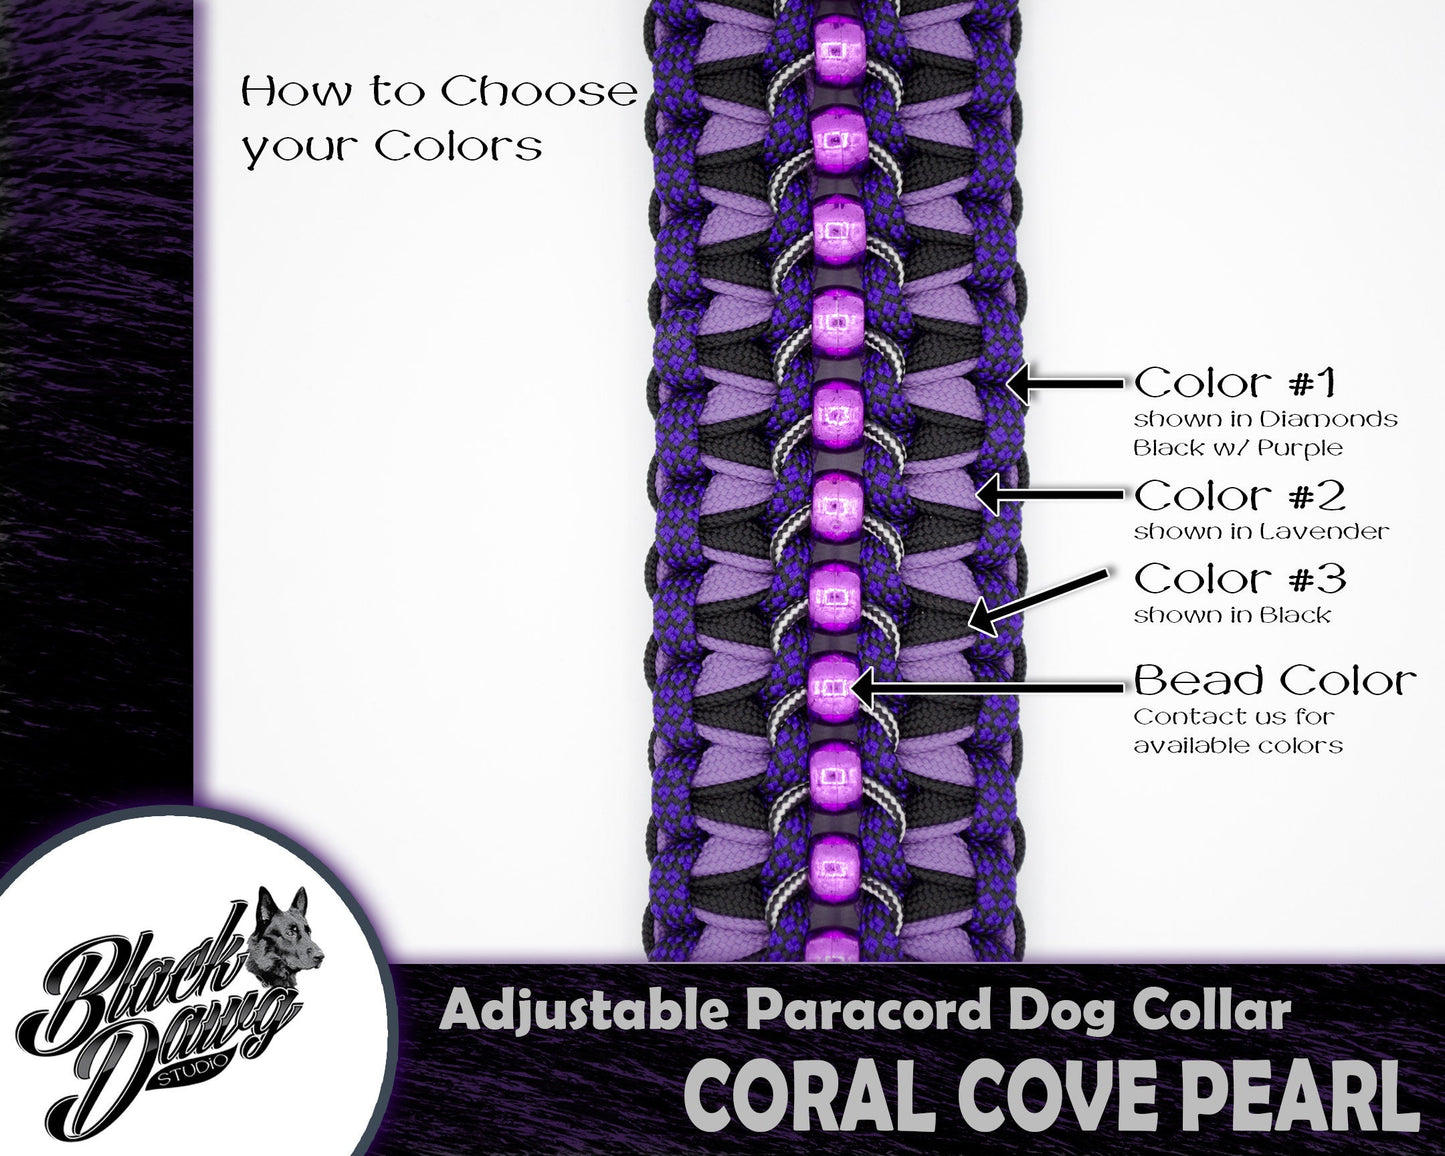 Coral Cove Pearl Adjustable Paracord Dog Collar ***CUSTOM ORDER***